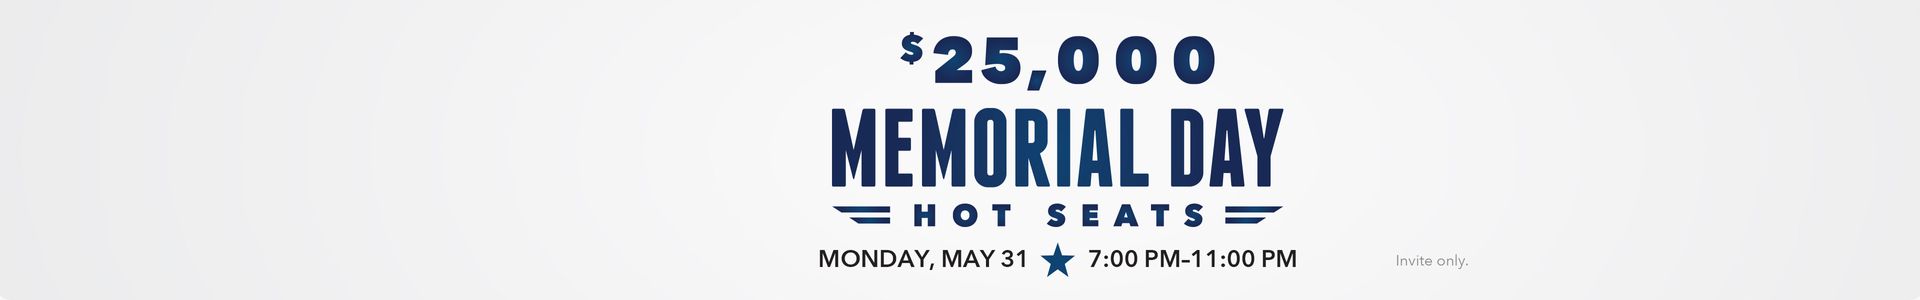 $25,000 Memorial Day Hot Seats